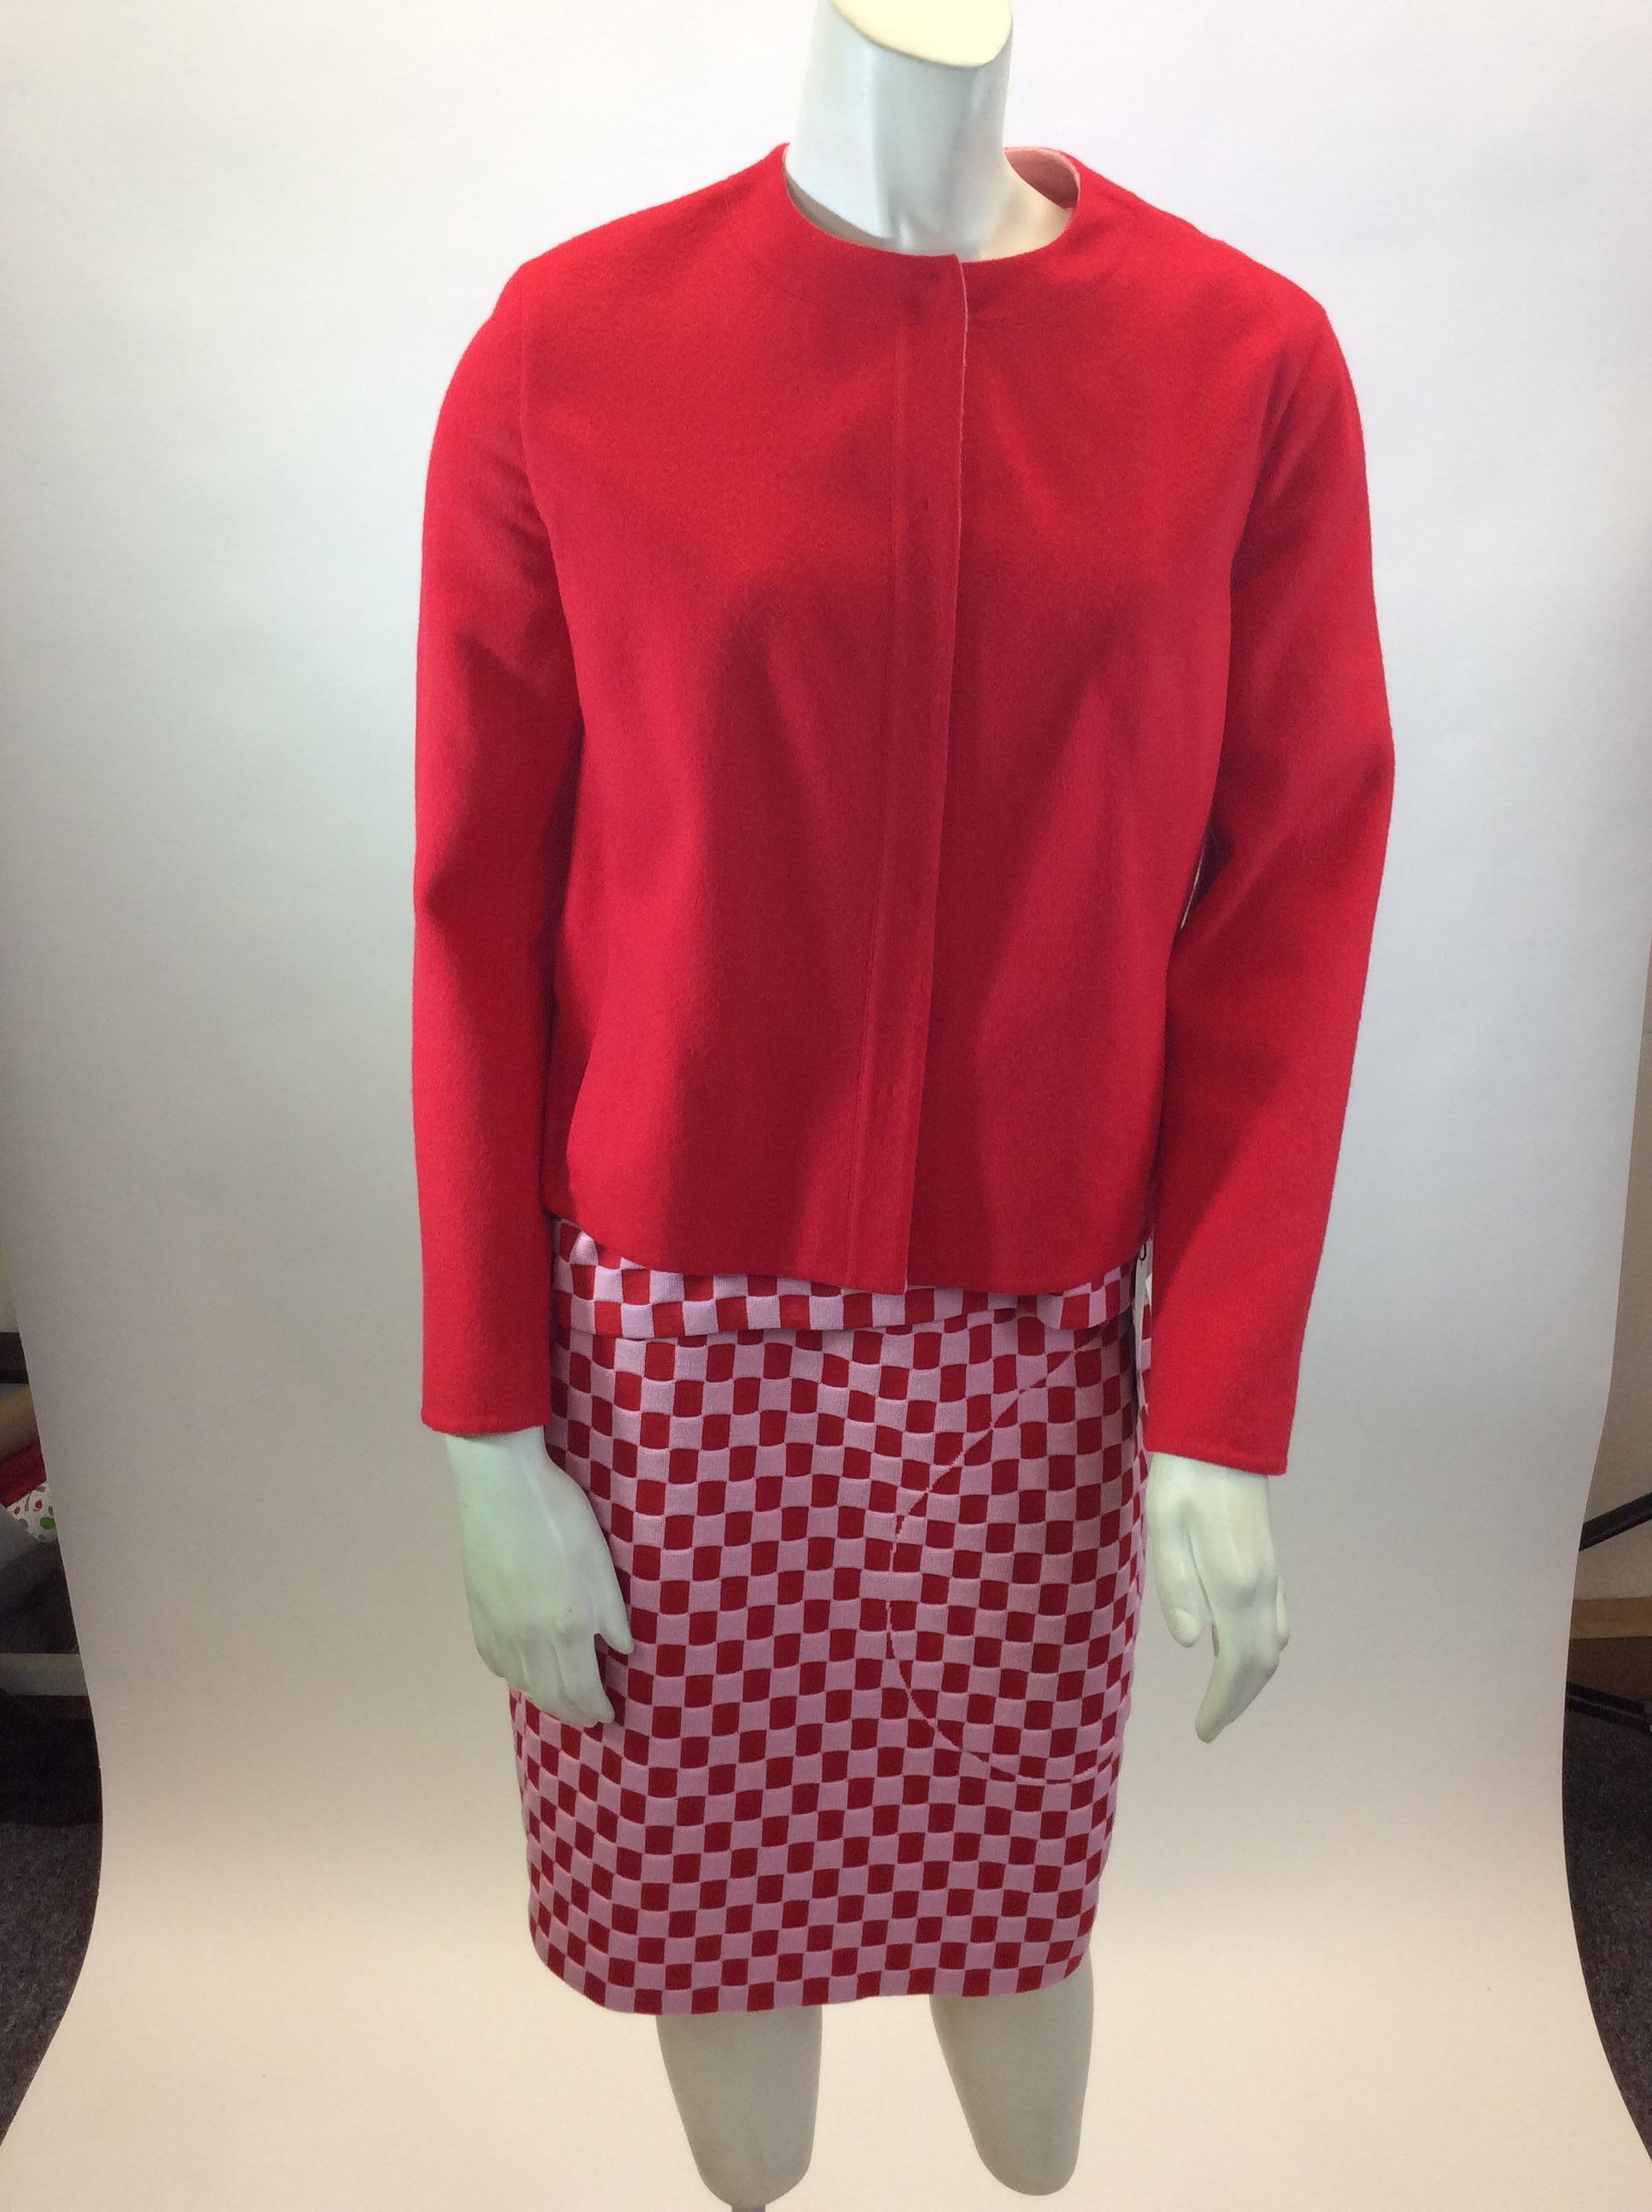 Akris Pink and Red Print Three Piece Skirt Set
$1299
Made in Switzerland
90% Silk, 10% Elastane
Skirt: Size 8
Length 21